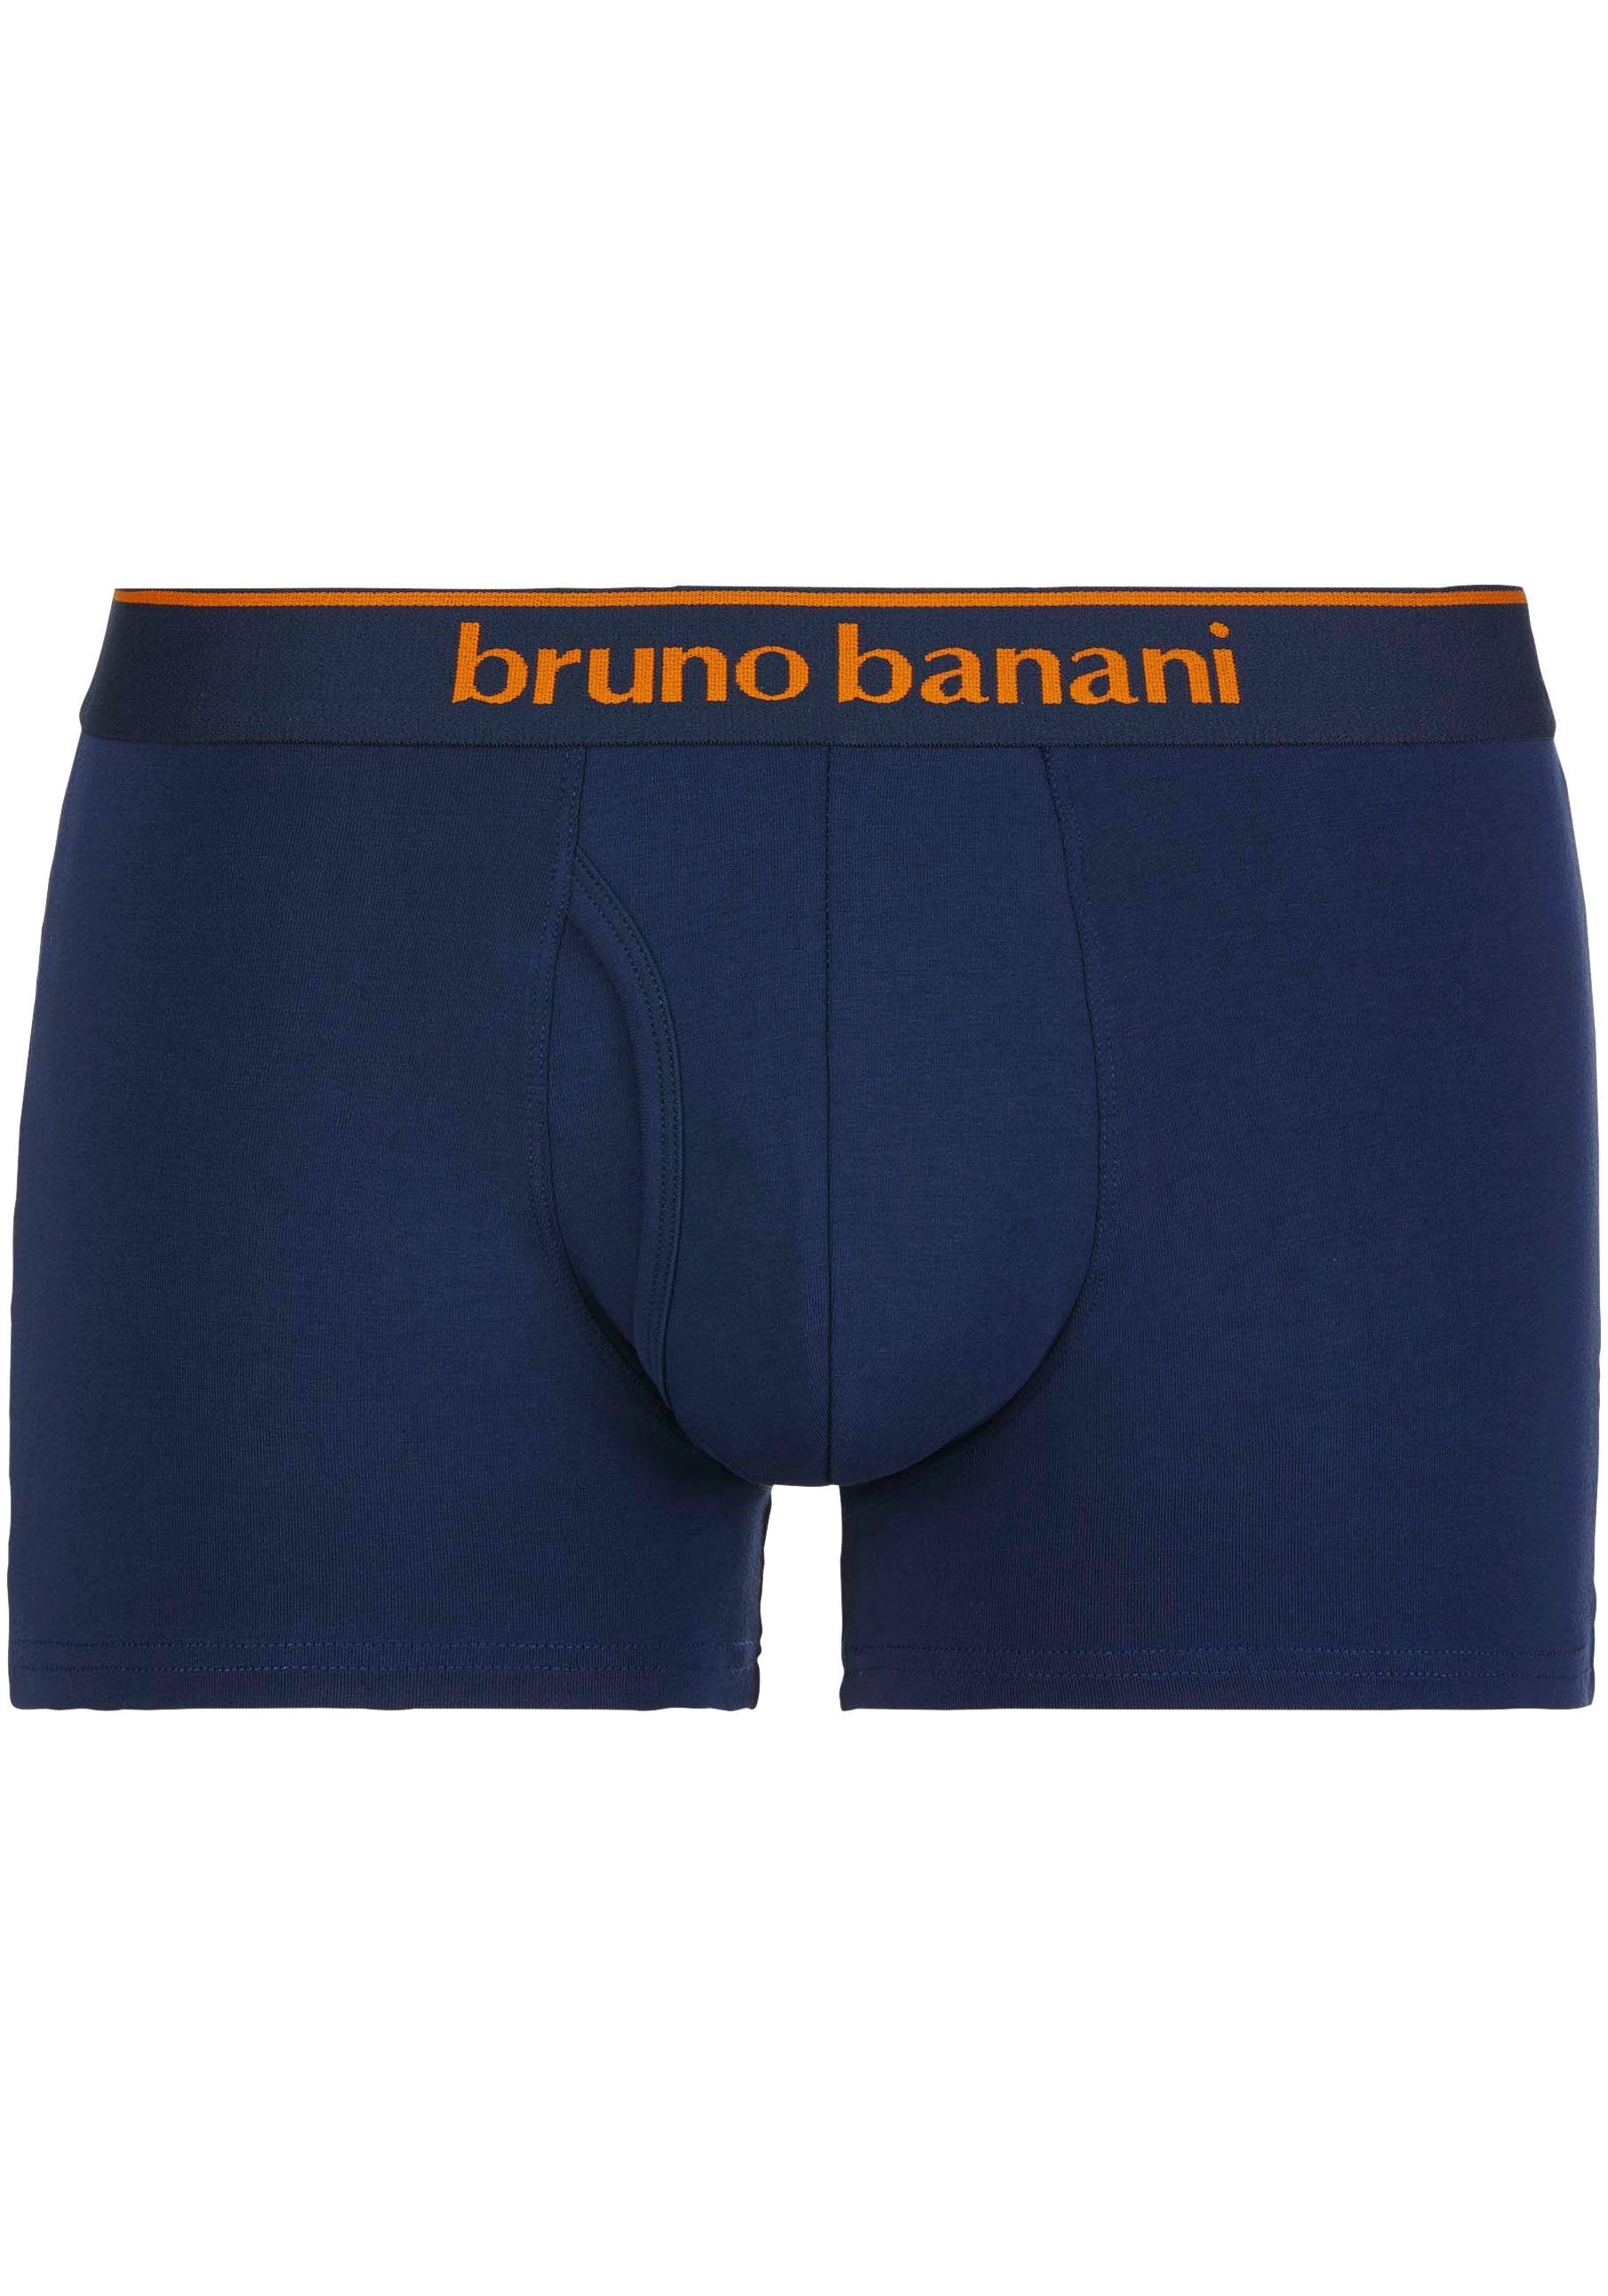 (Packung, Details Quick Boxershorts Banani 2Pack 2-St) Access Bruno Short blau-schwarz Kontrastfarbene